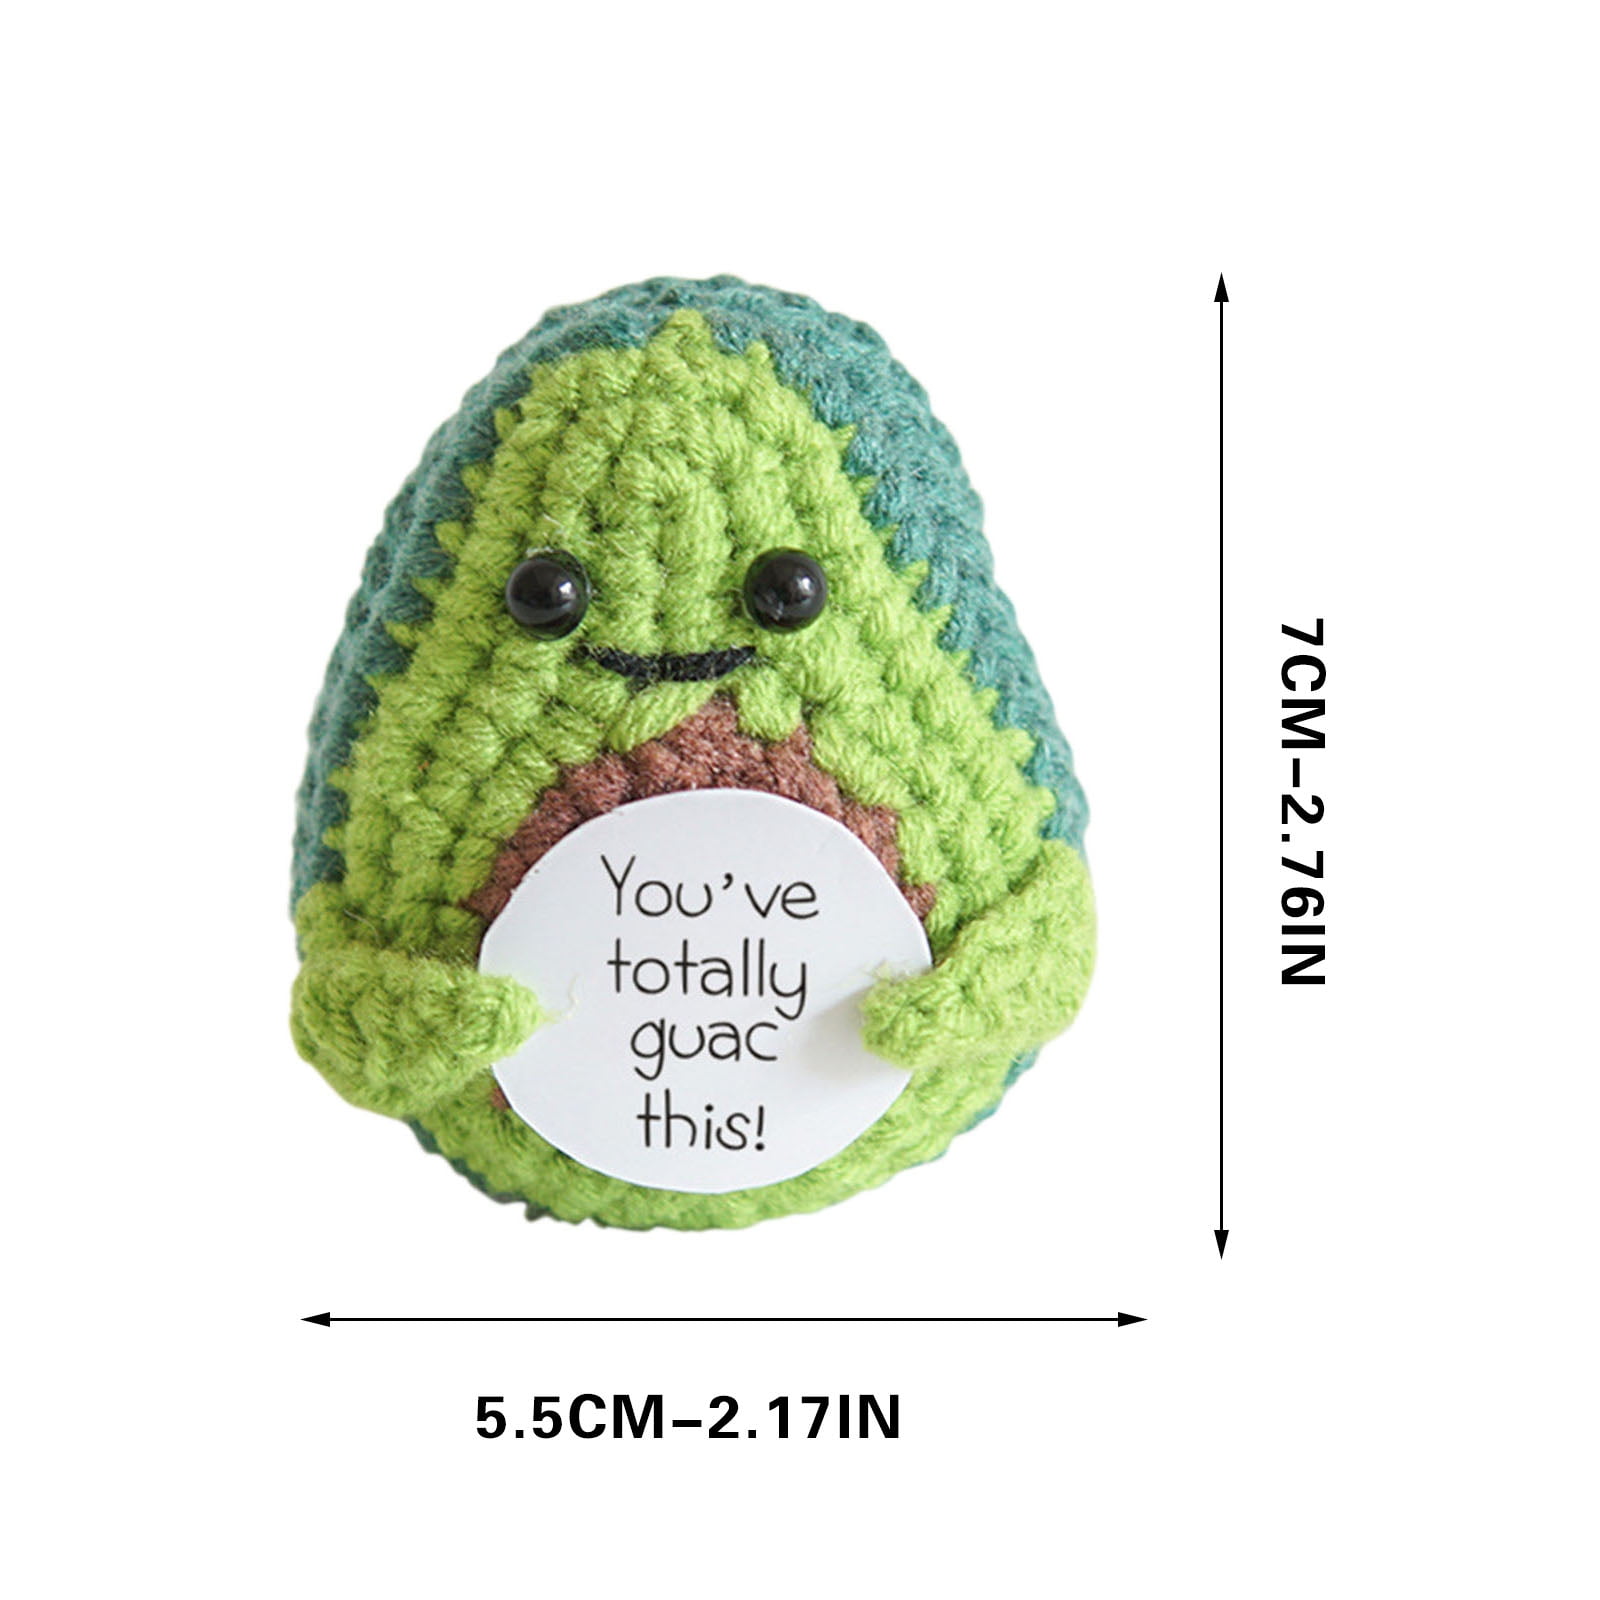 HandmadeCrochetUnion + Emotional Support Pickle Crochet Kit